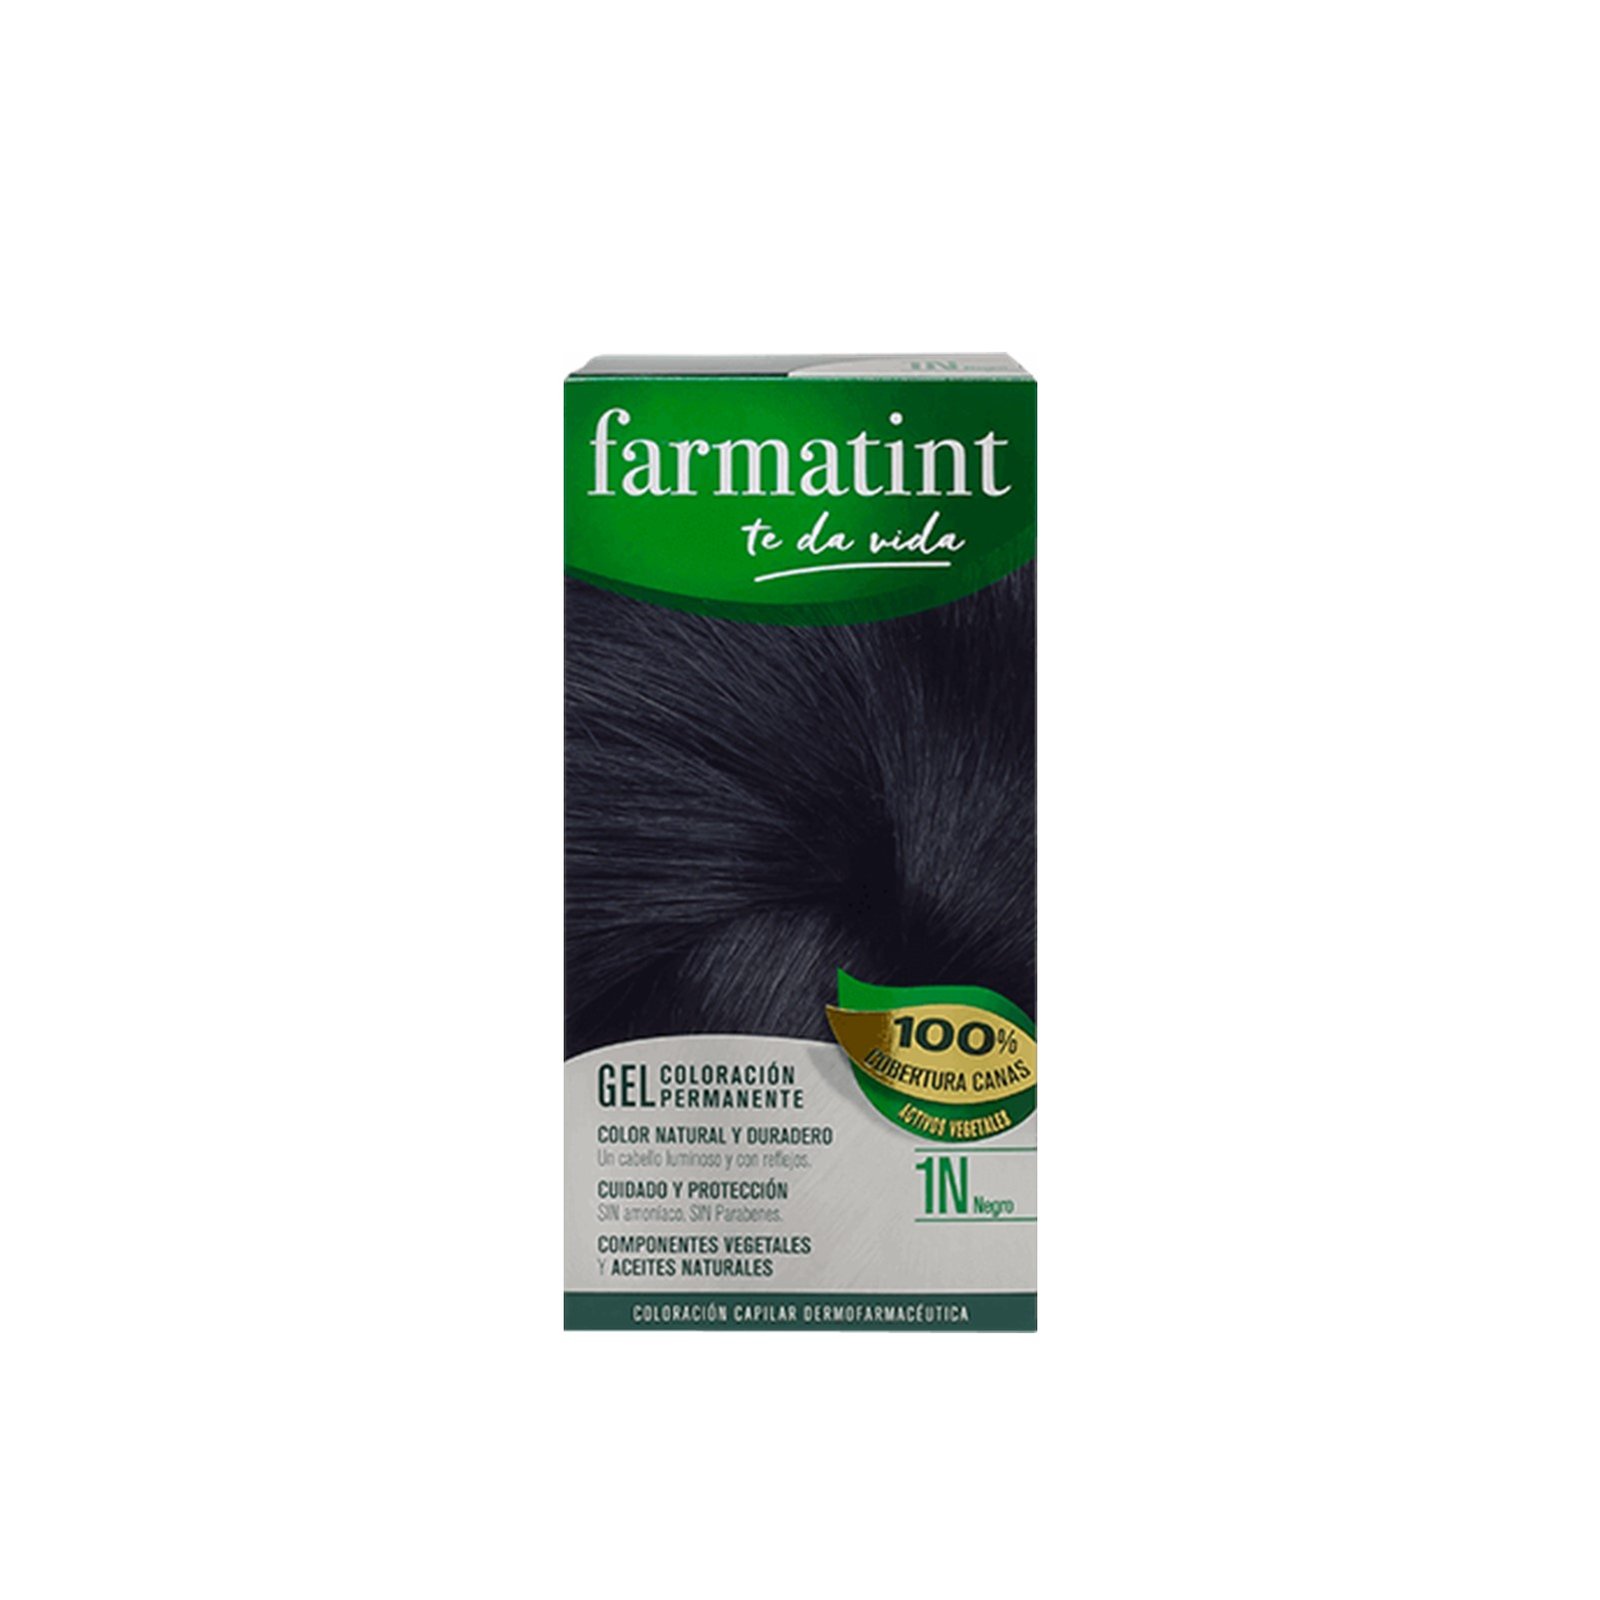 Farmatint Permanent Hair Color Gel